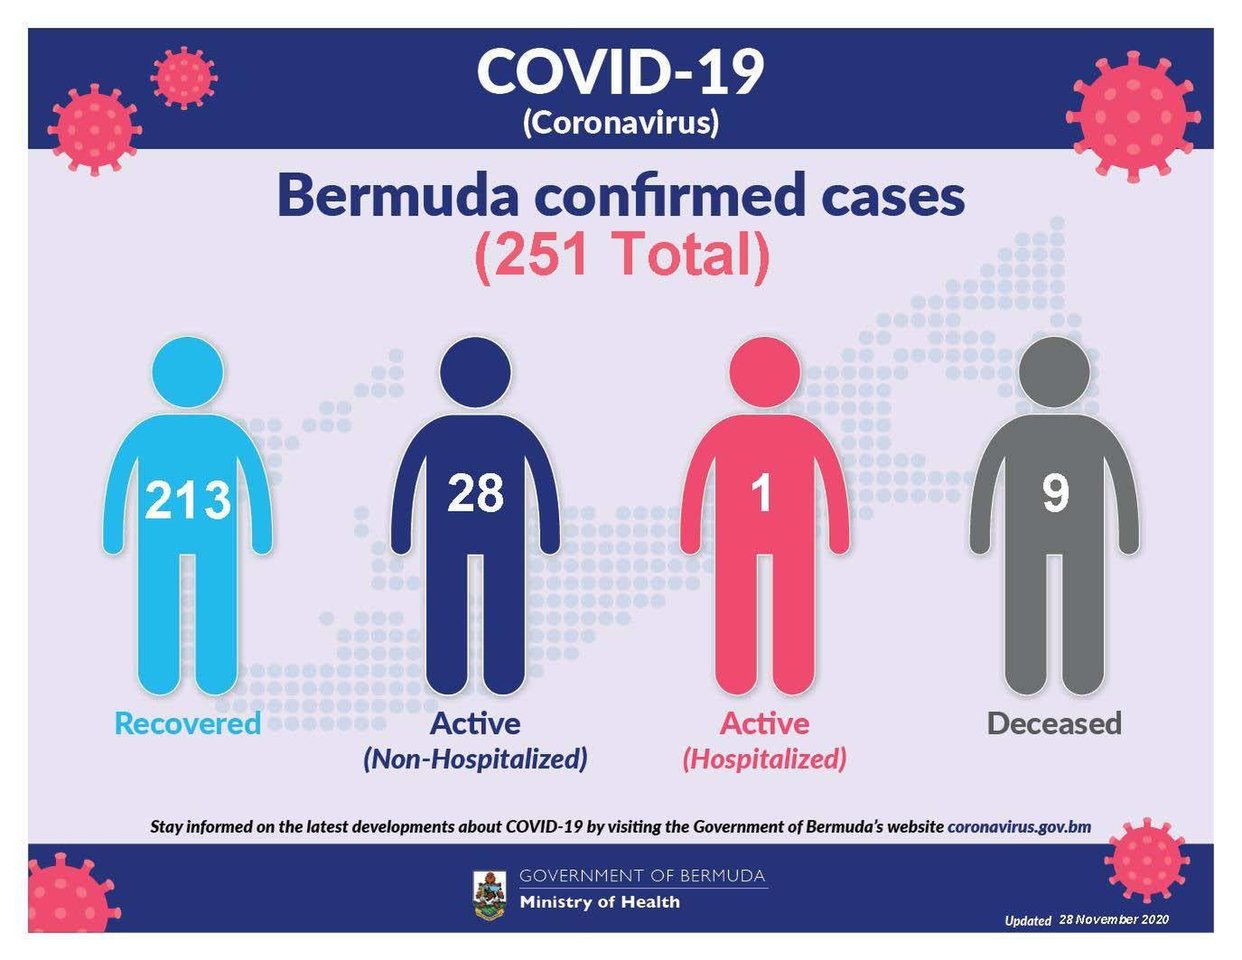 Four new COVID-19 cases reported in Bermuda, 28 November